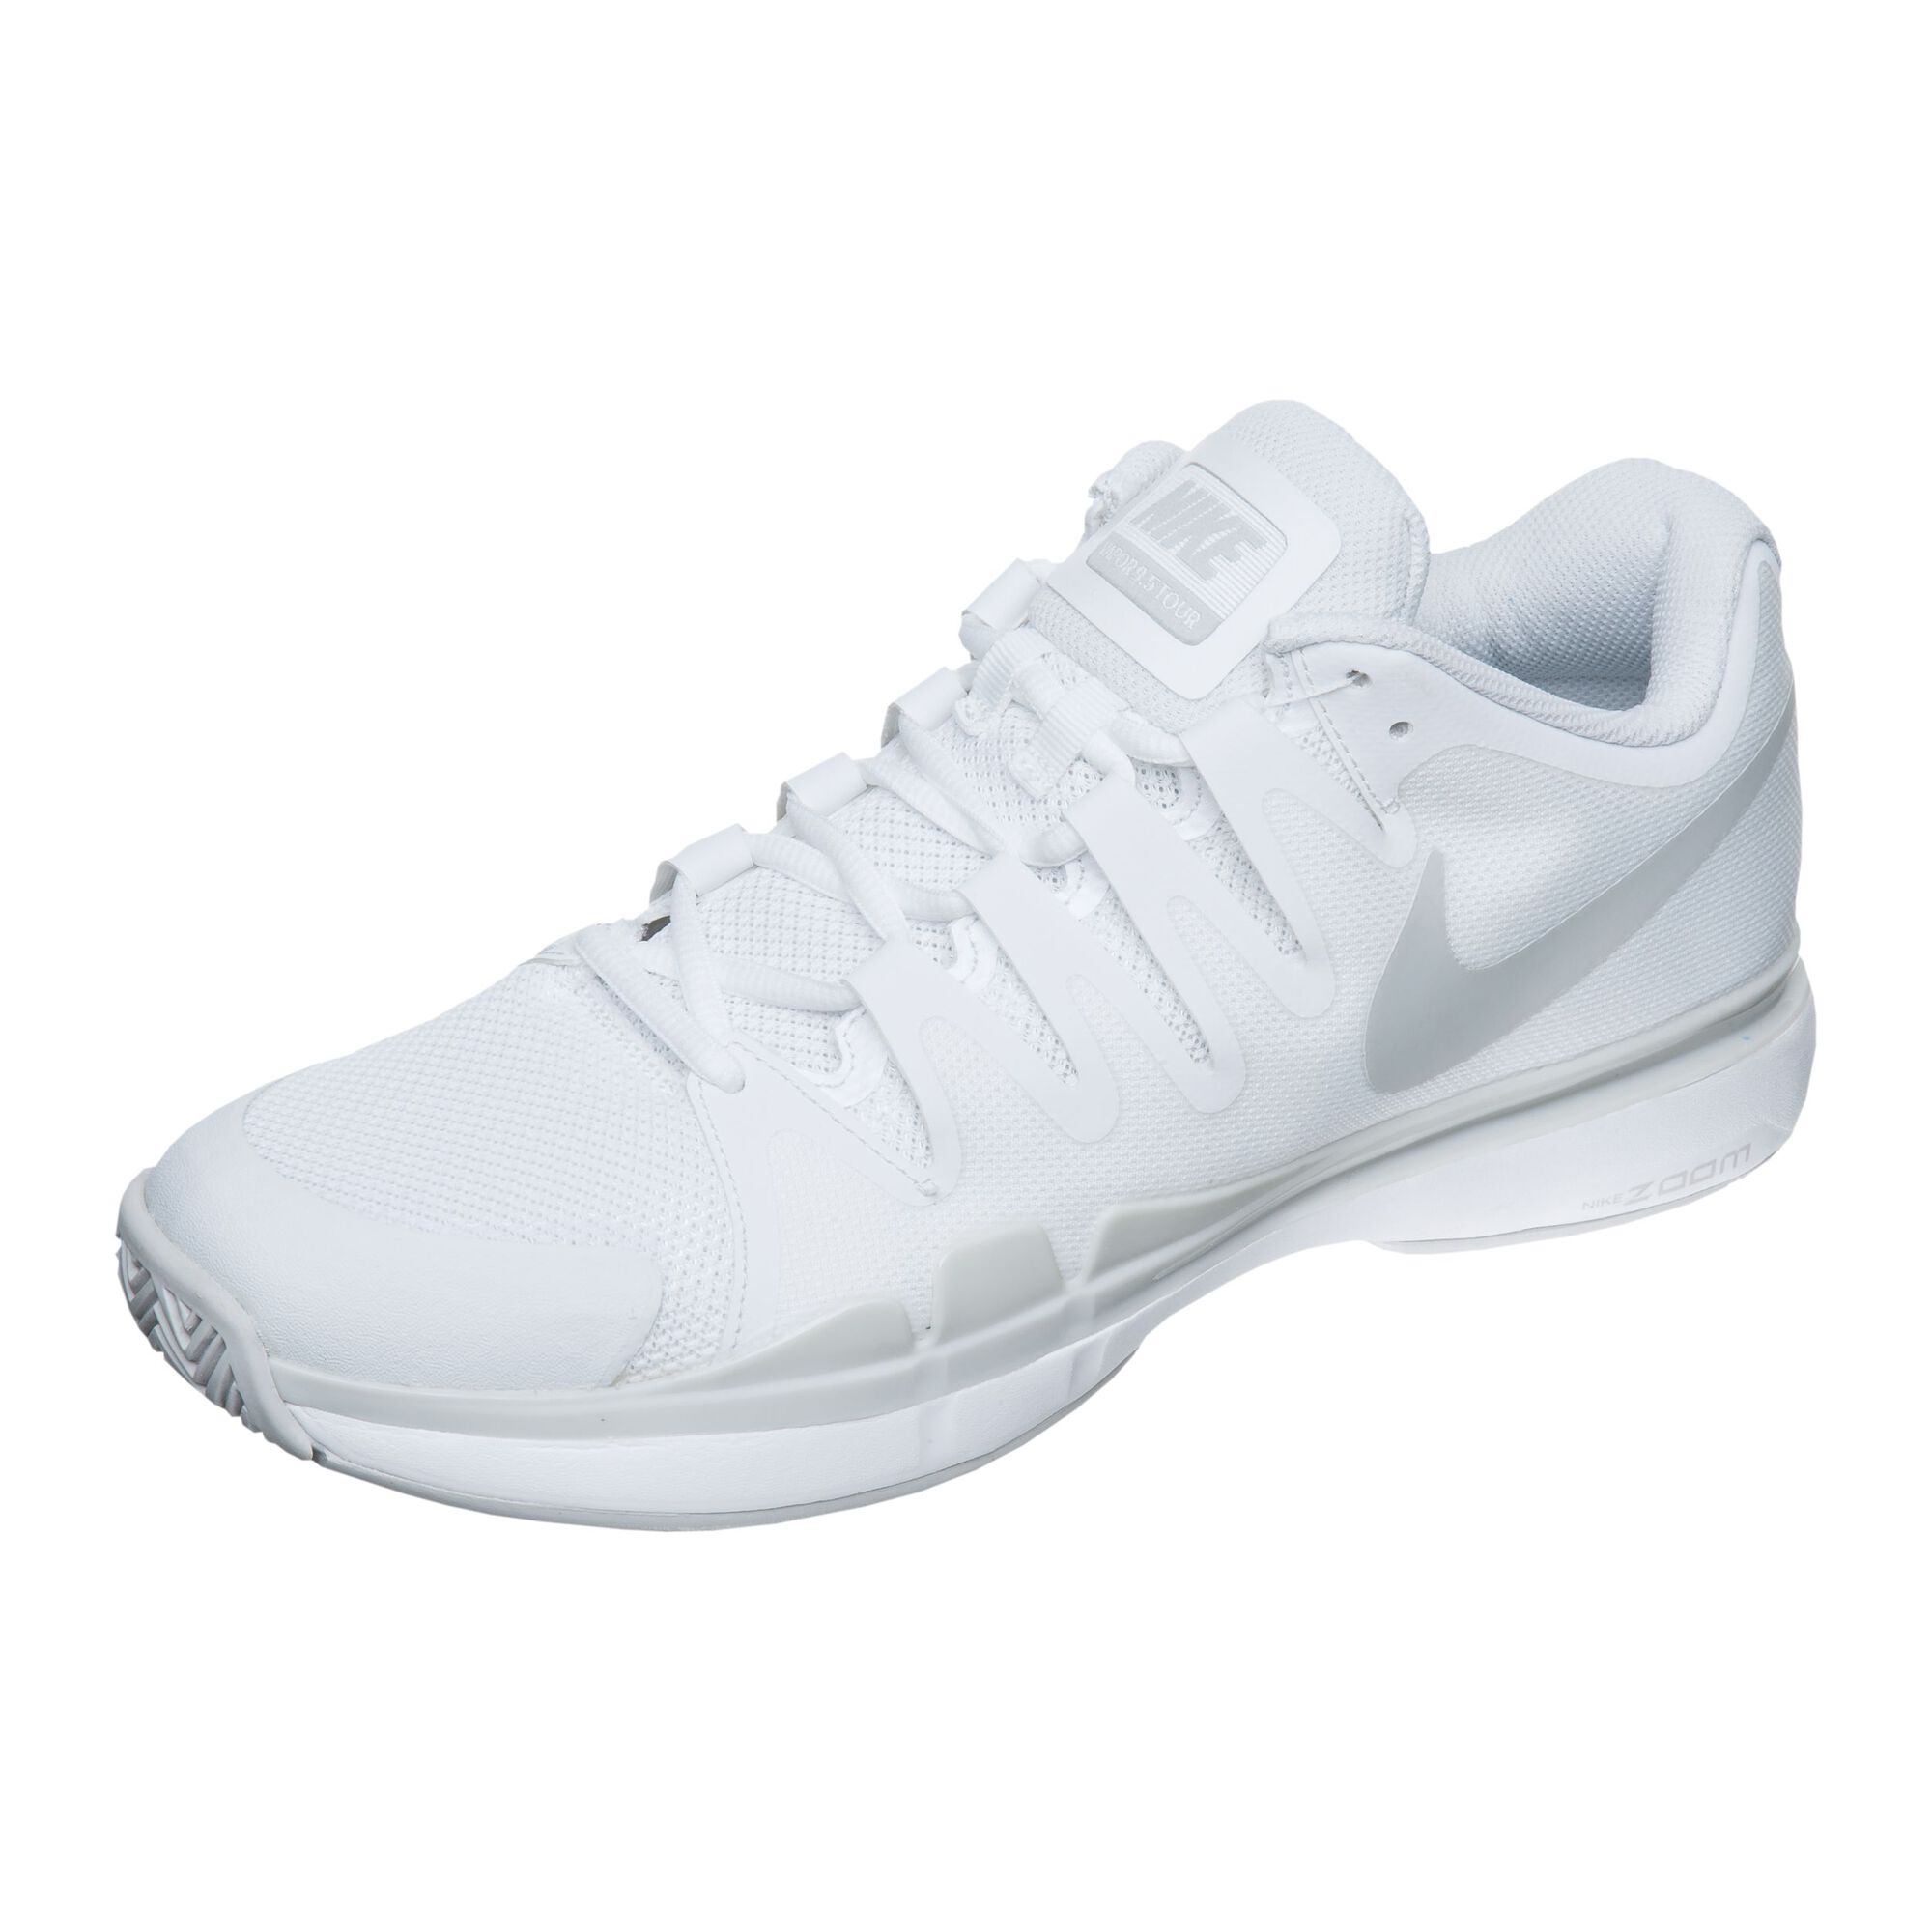 meisje nieuws filter buy Nike Maria Sharapova Zoom Vapor 9.5 Tour All Court Shoe Women - Cream  online | Tennis-Point